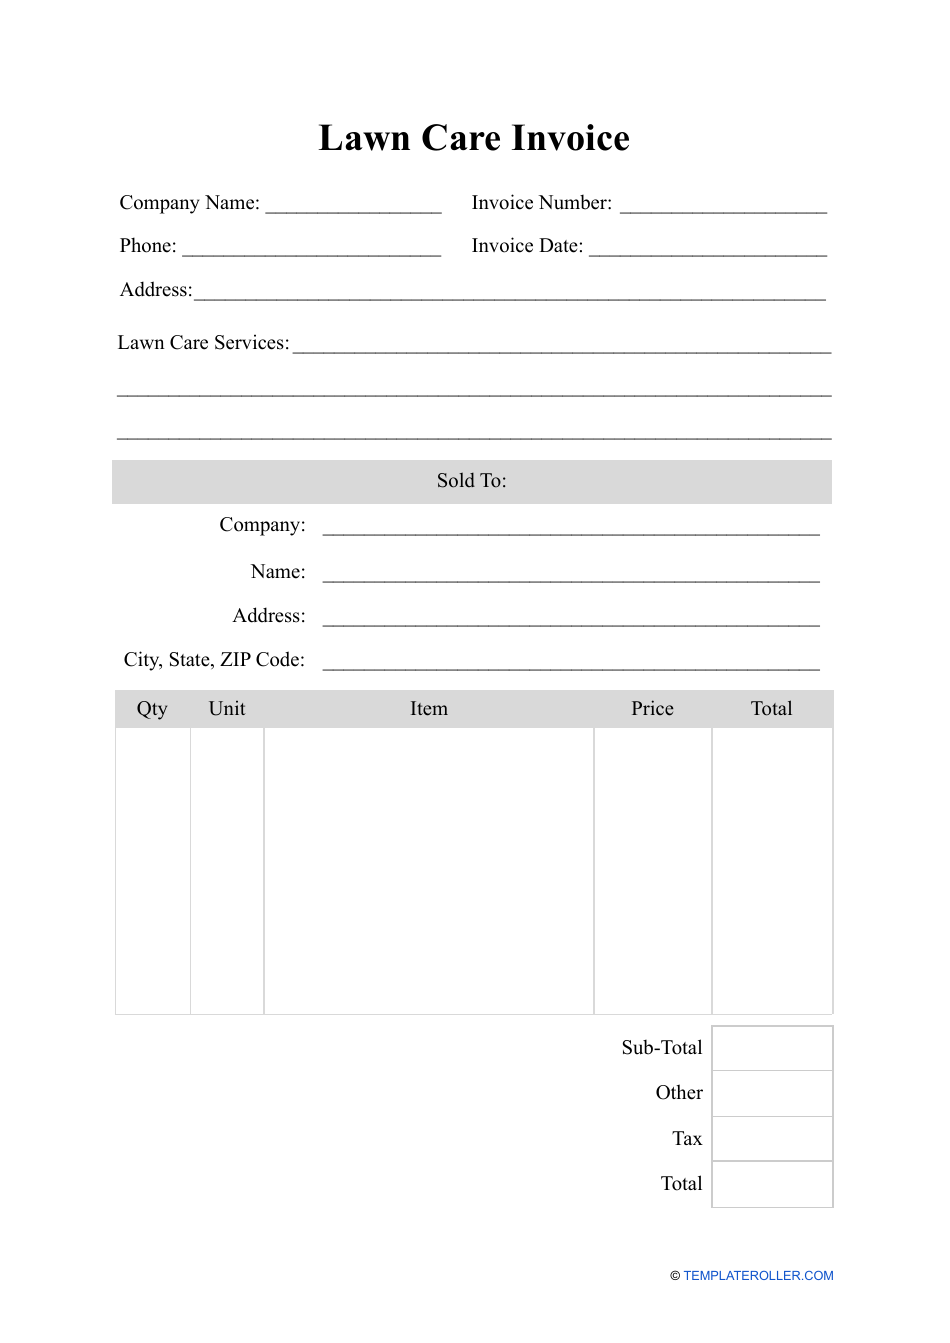 lawn care invoice template download printable pdf